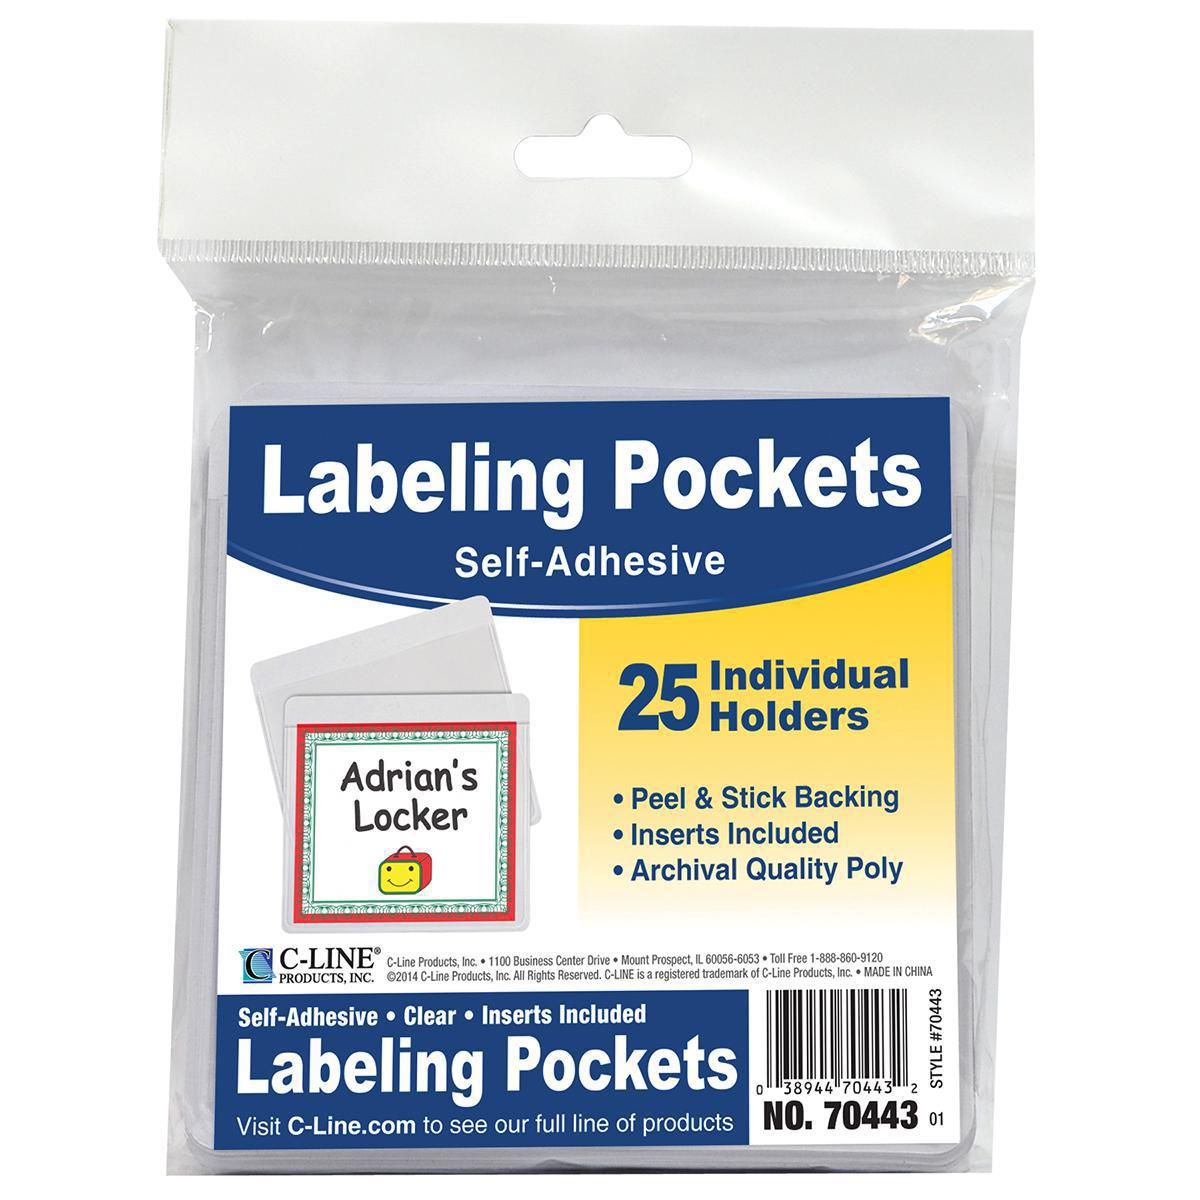  Self-Adhesive Labeling Pockets 